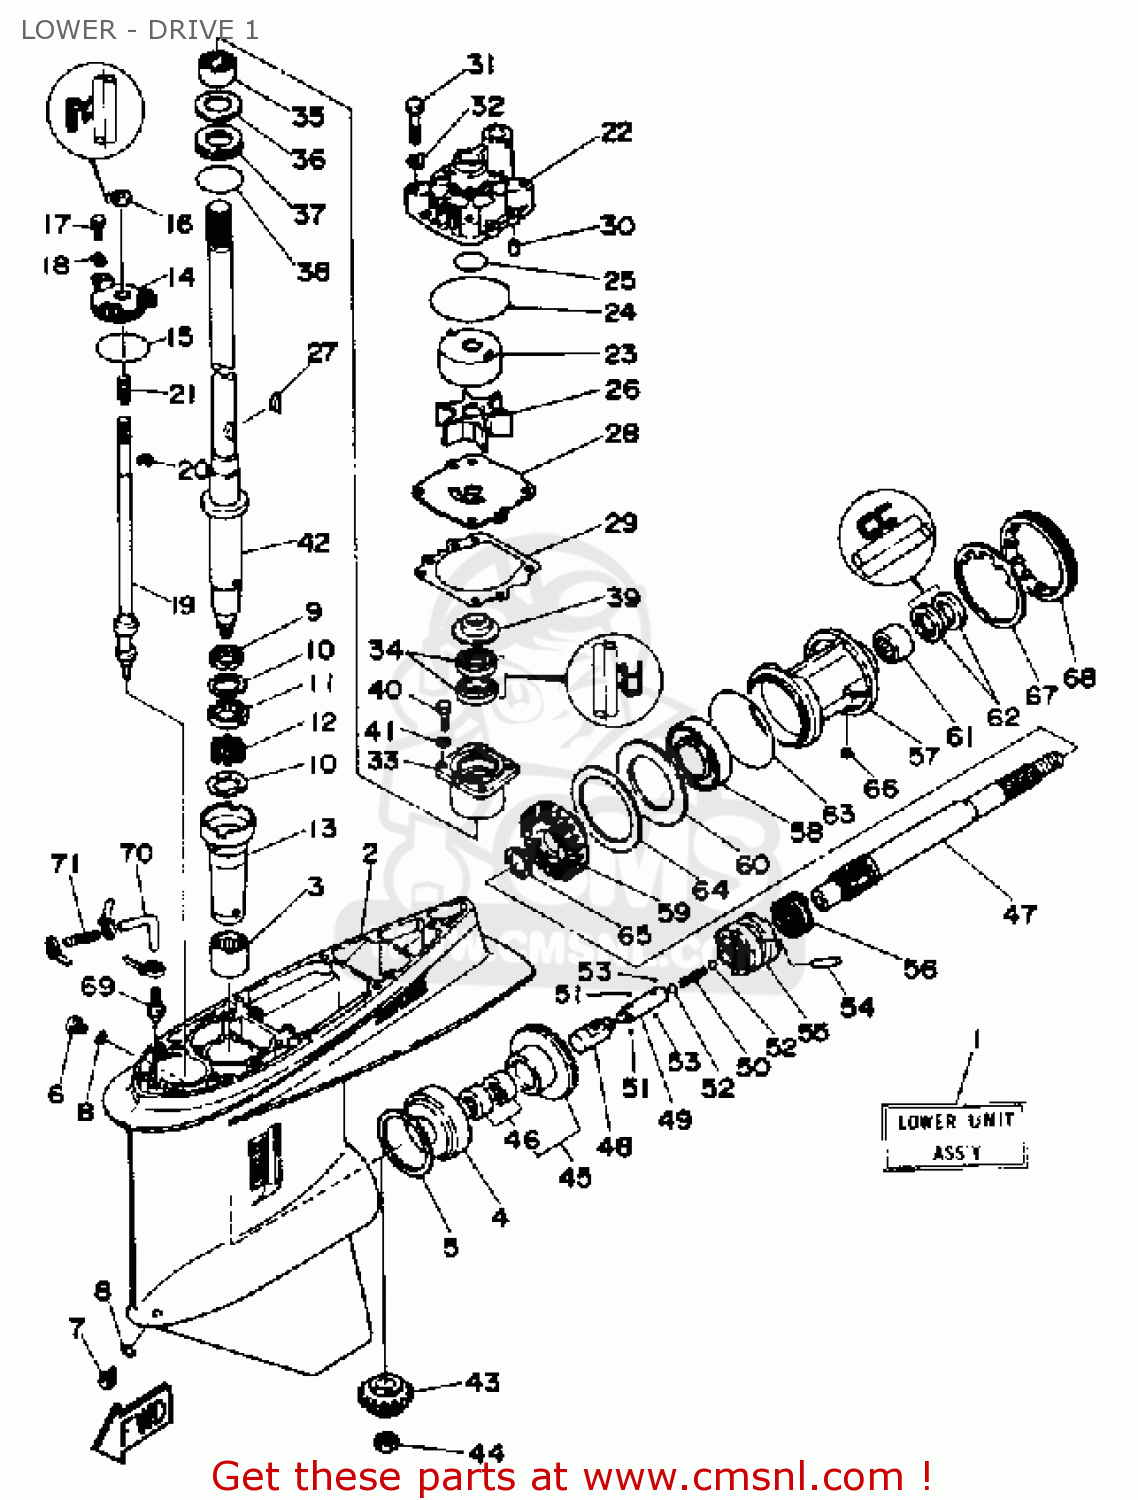 1974 Honda xl 175 wiring diagram #3